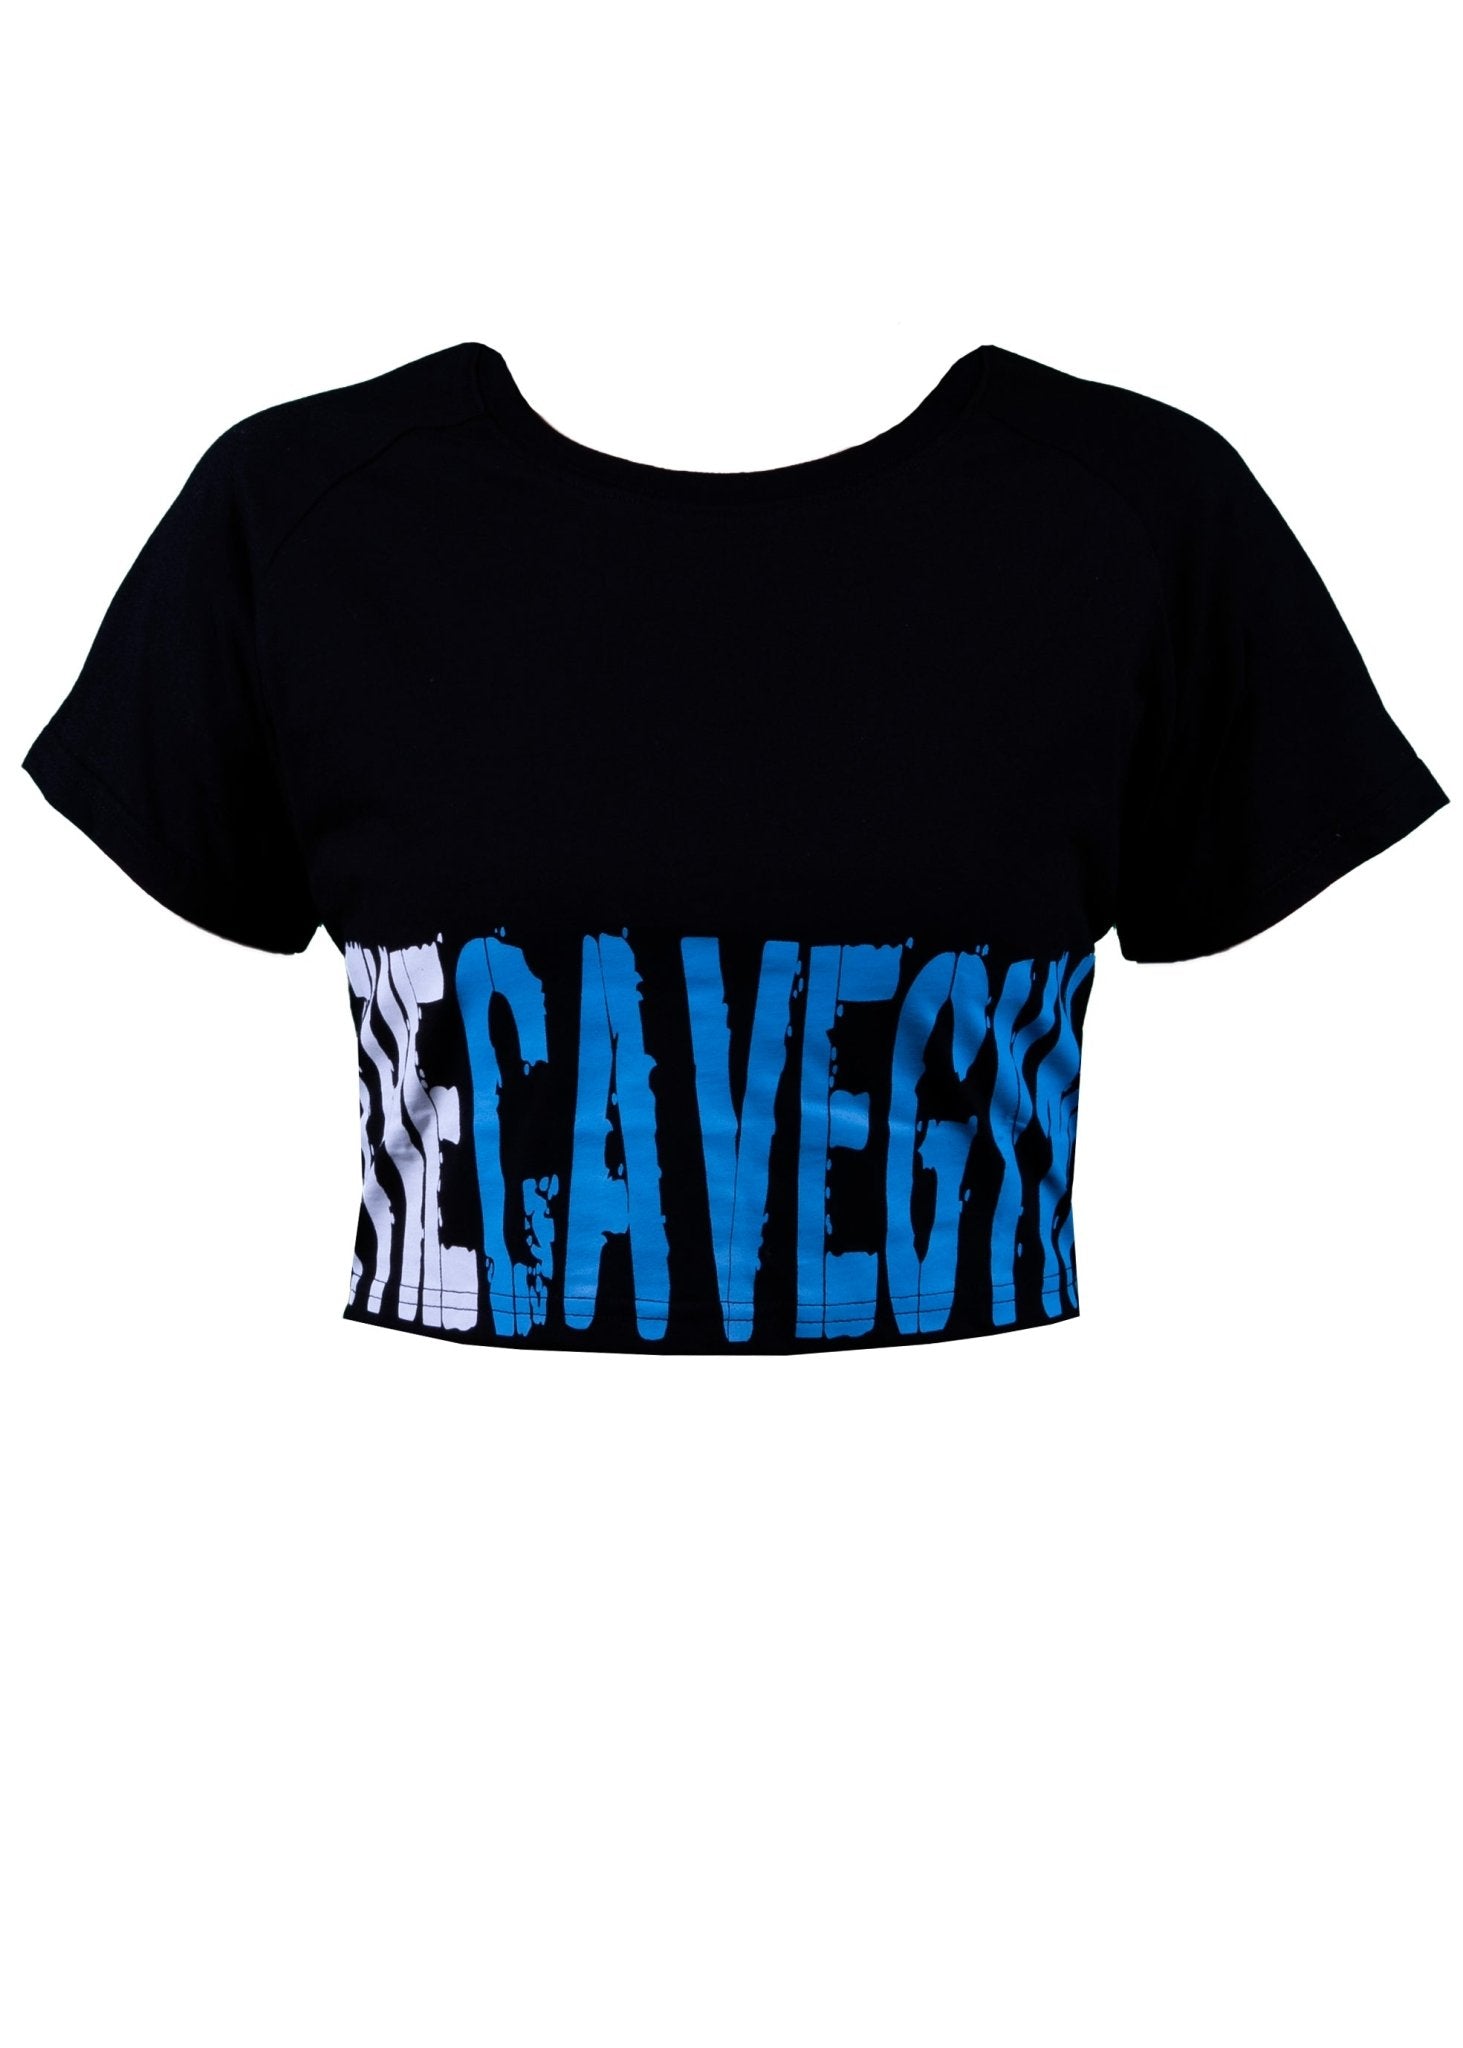 Cave Apparel - Women's Cropped Shirt Blue - Merchandise - Blue - The Cave Gym